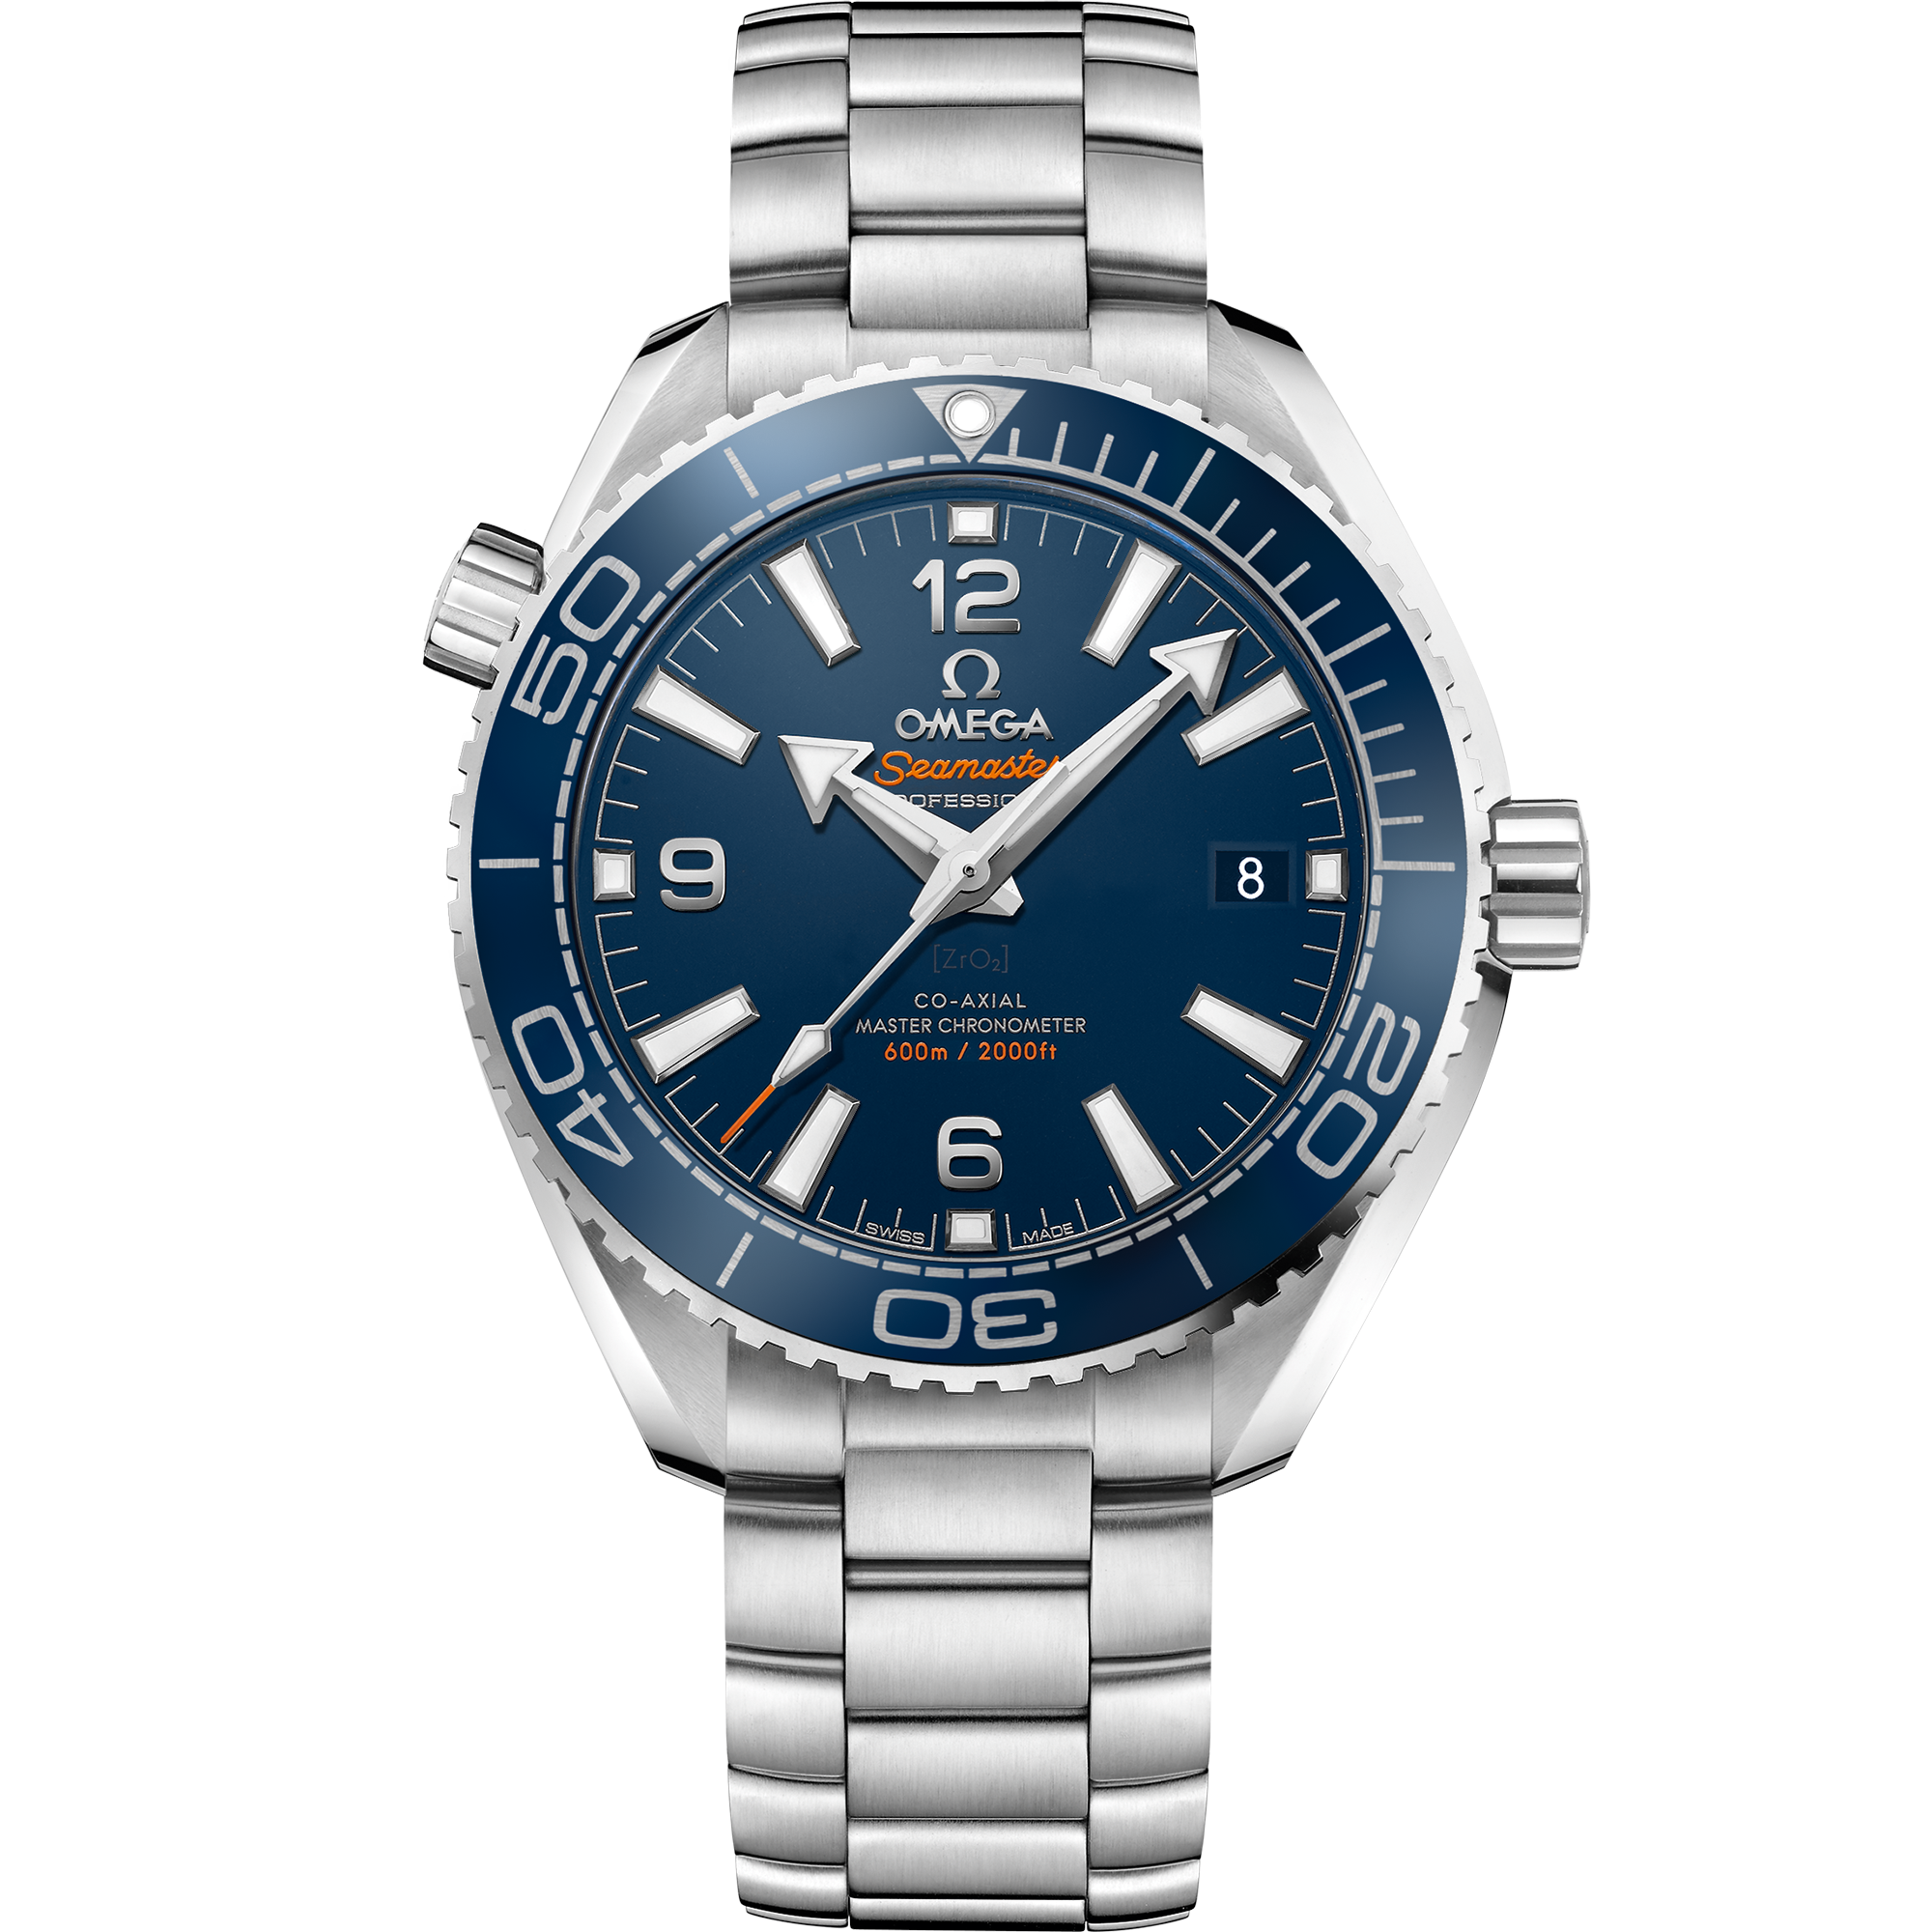 Planet Ocean 600M Seamaster Steel Chronometer Watch 215.30.40.20.01.001 |  OMEGA US®